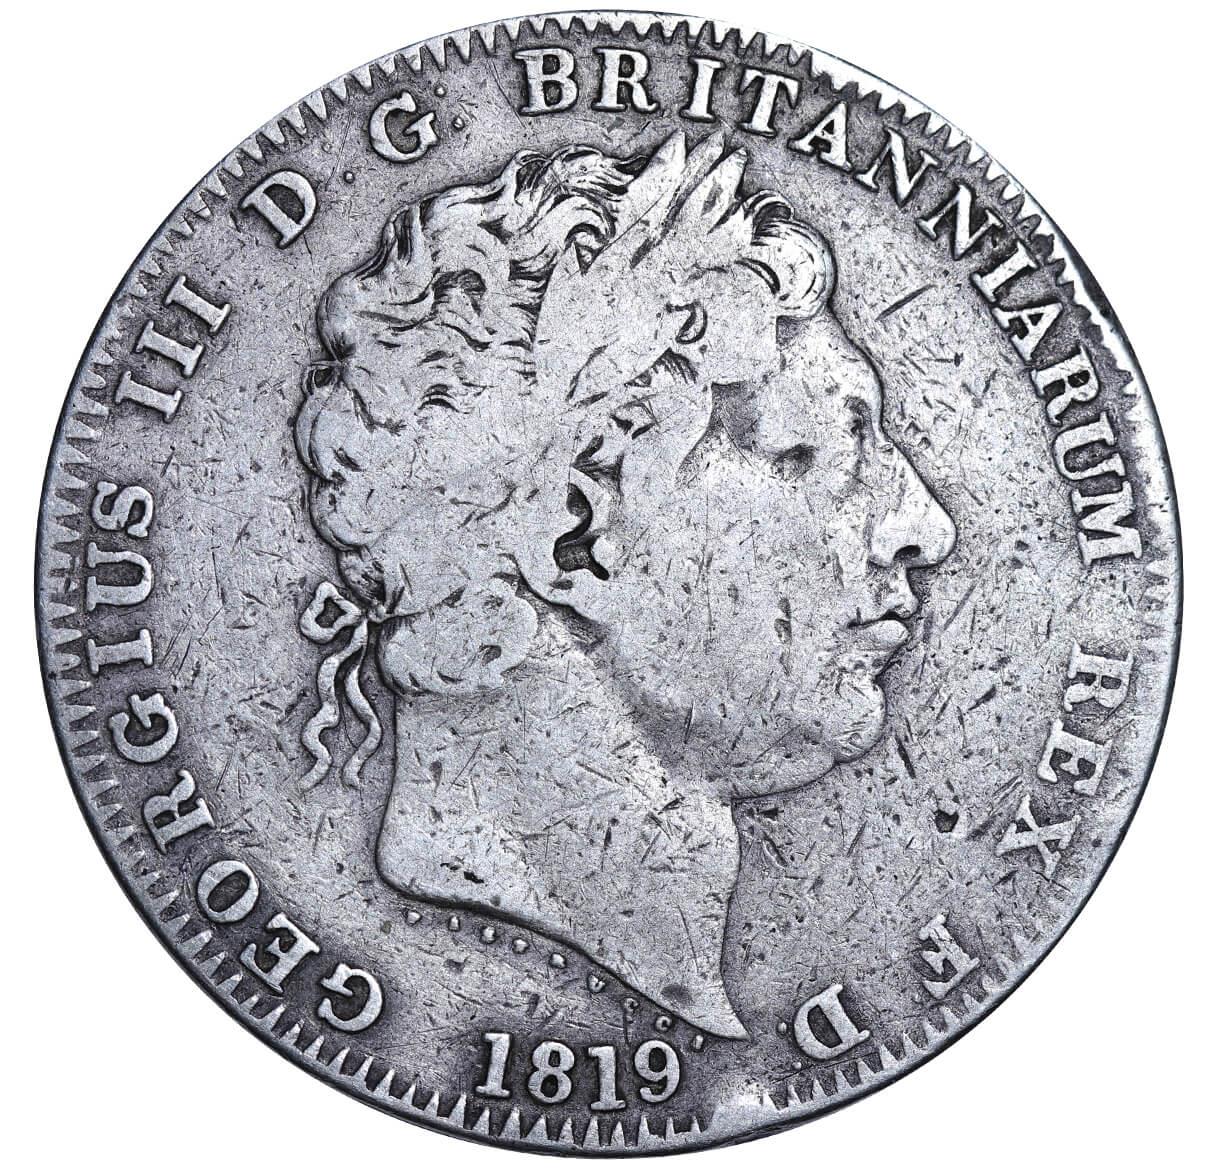 United Kingdom, 1 Crown, 1819 year - Image 2 of 3